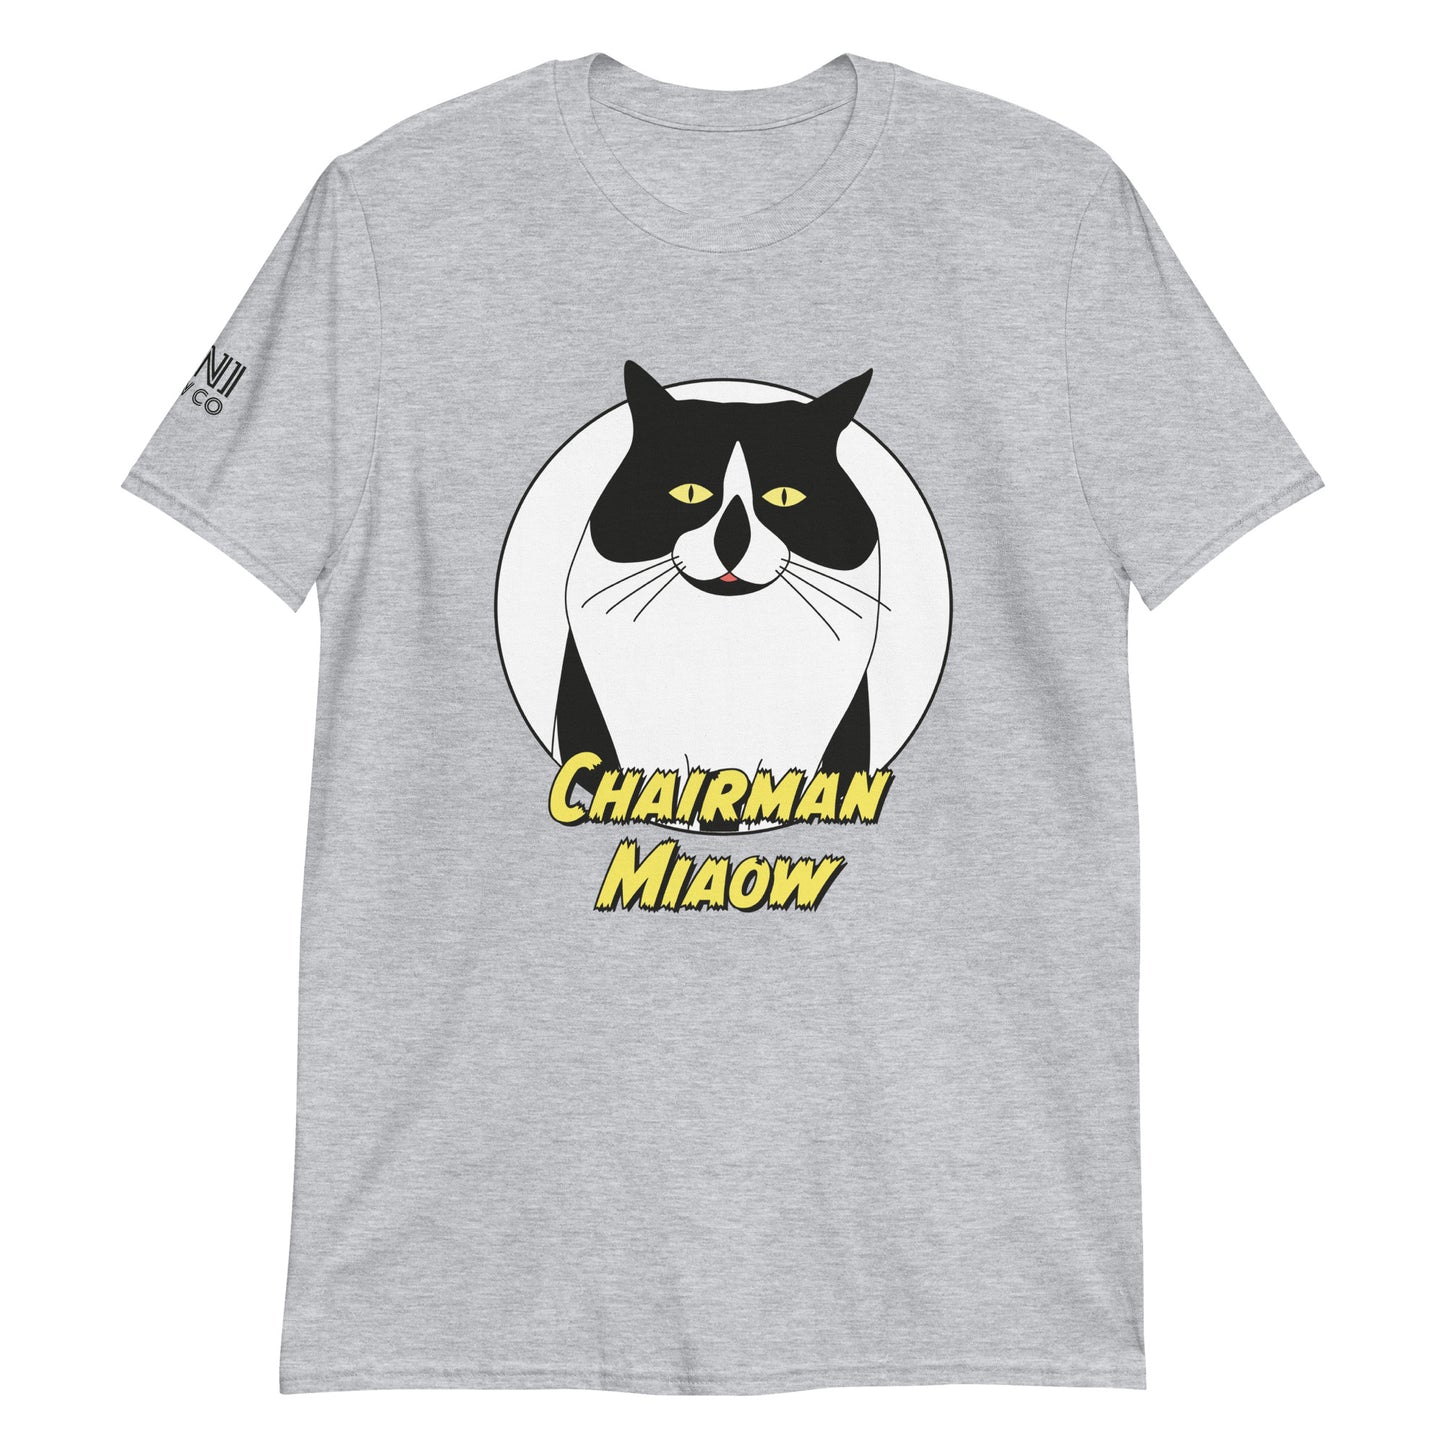 Chairman Miaow Short-Sleeve Unisex T-Shirt